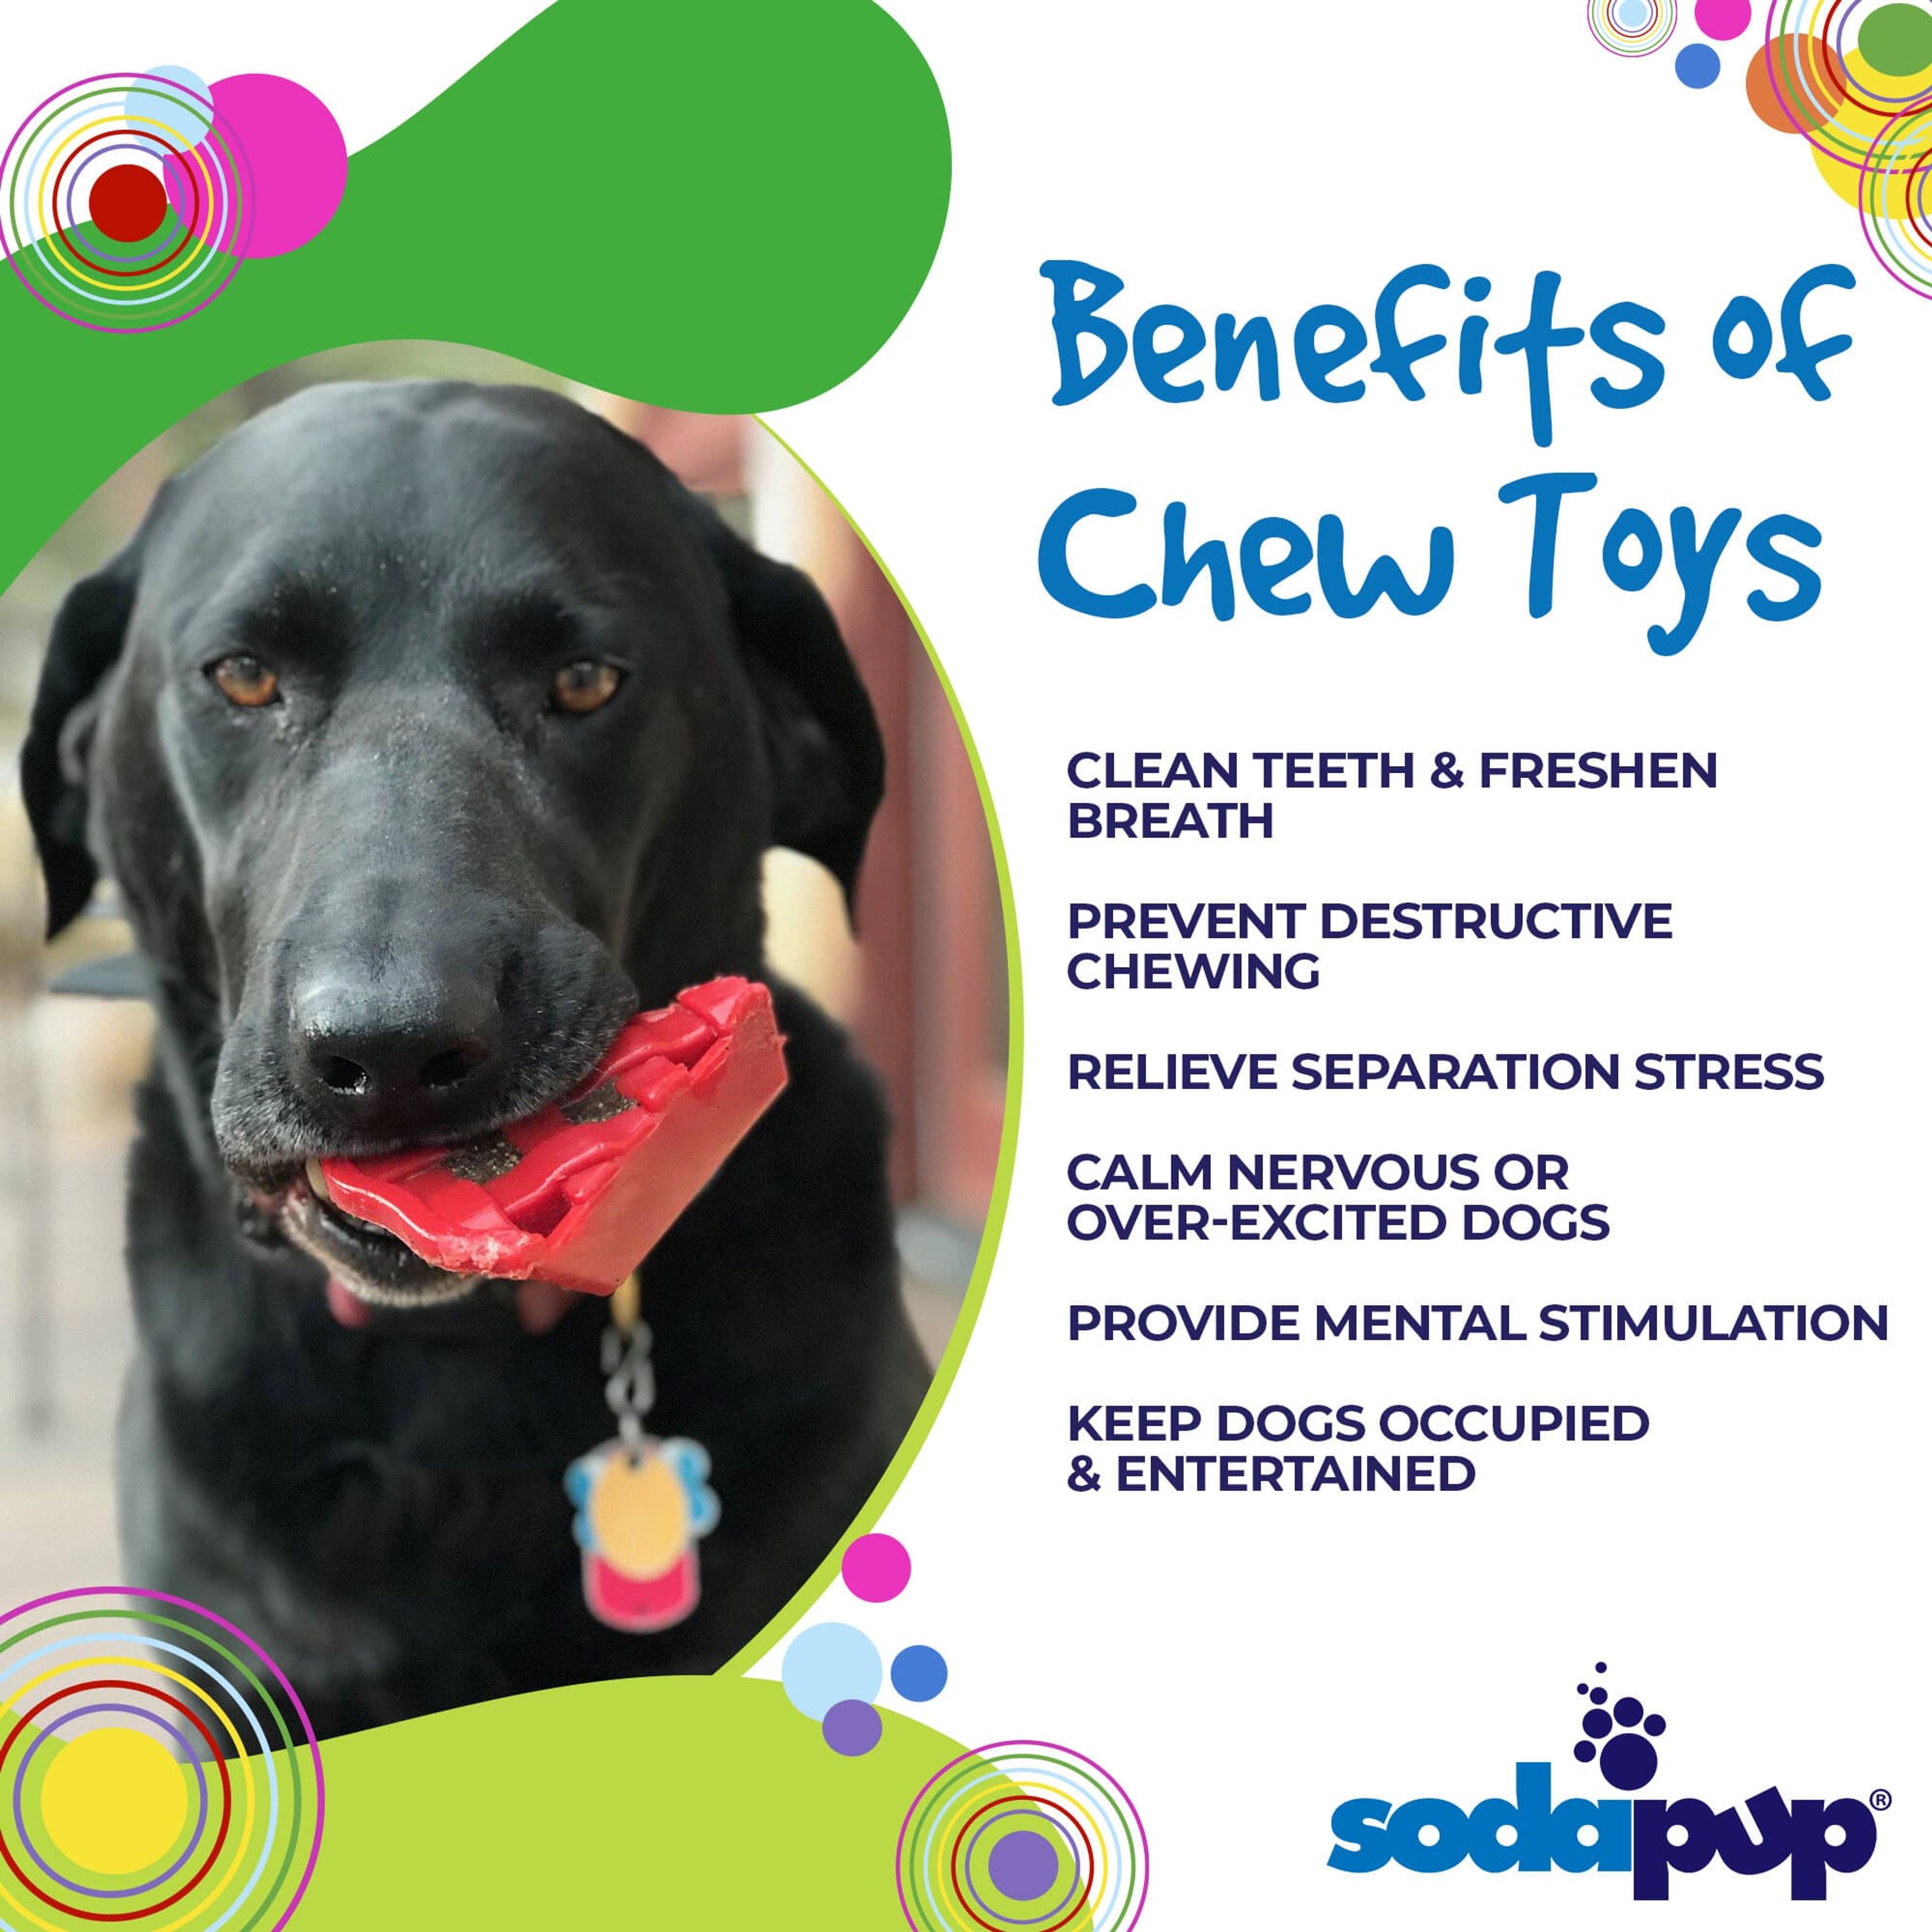 Cherry Pie Ultra Durable Nylon Dog Chew Toy and Treat Holder